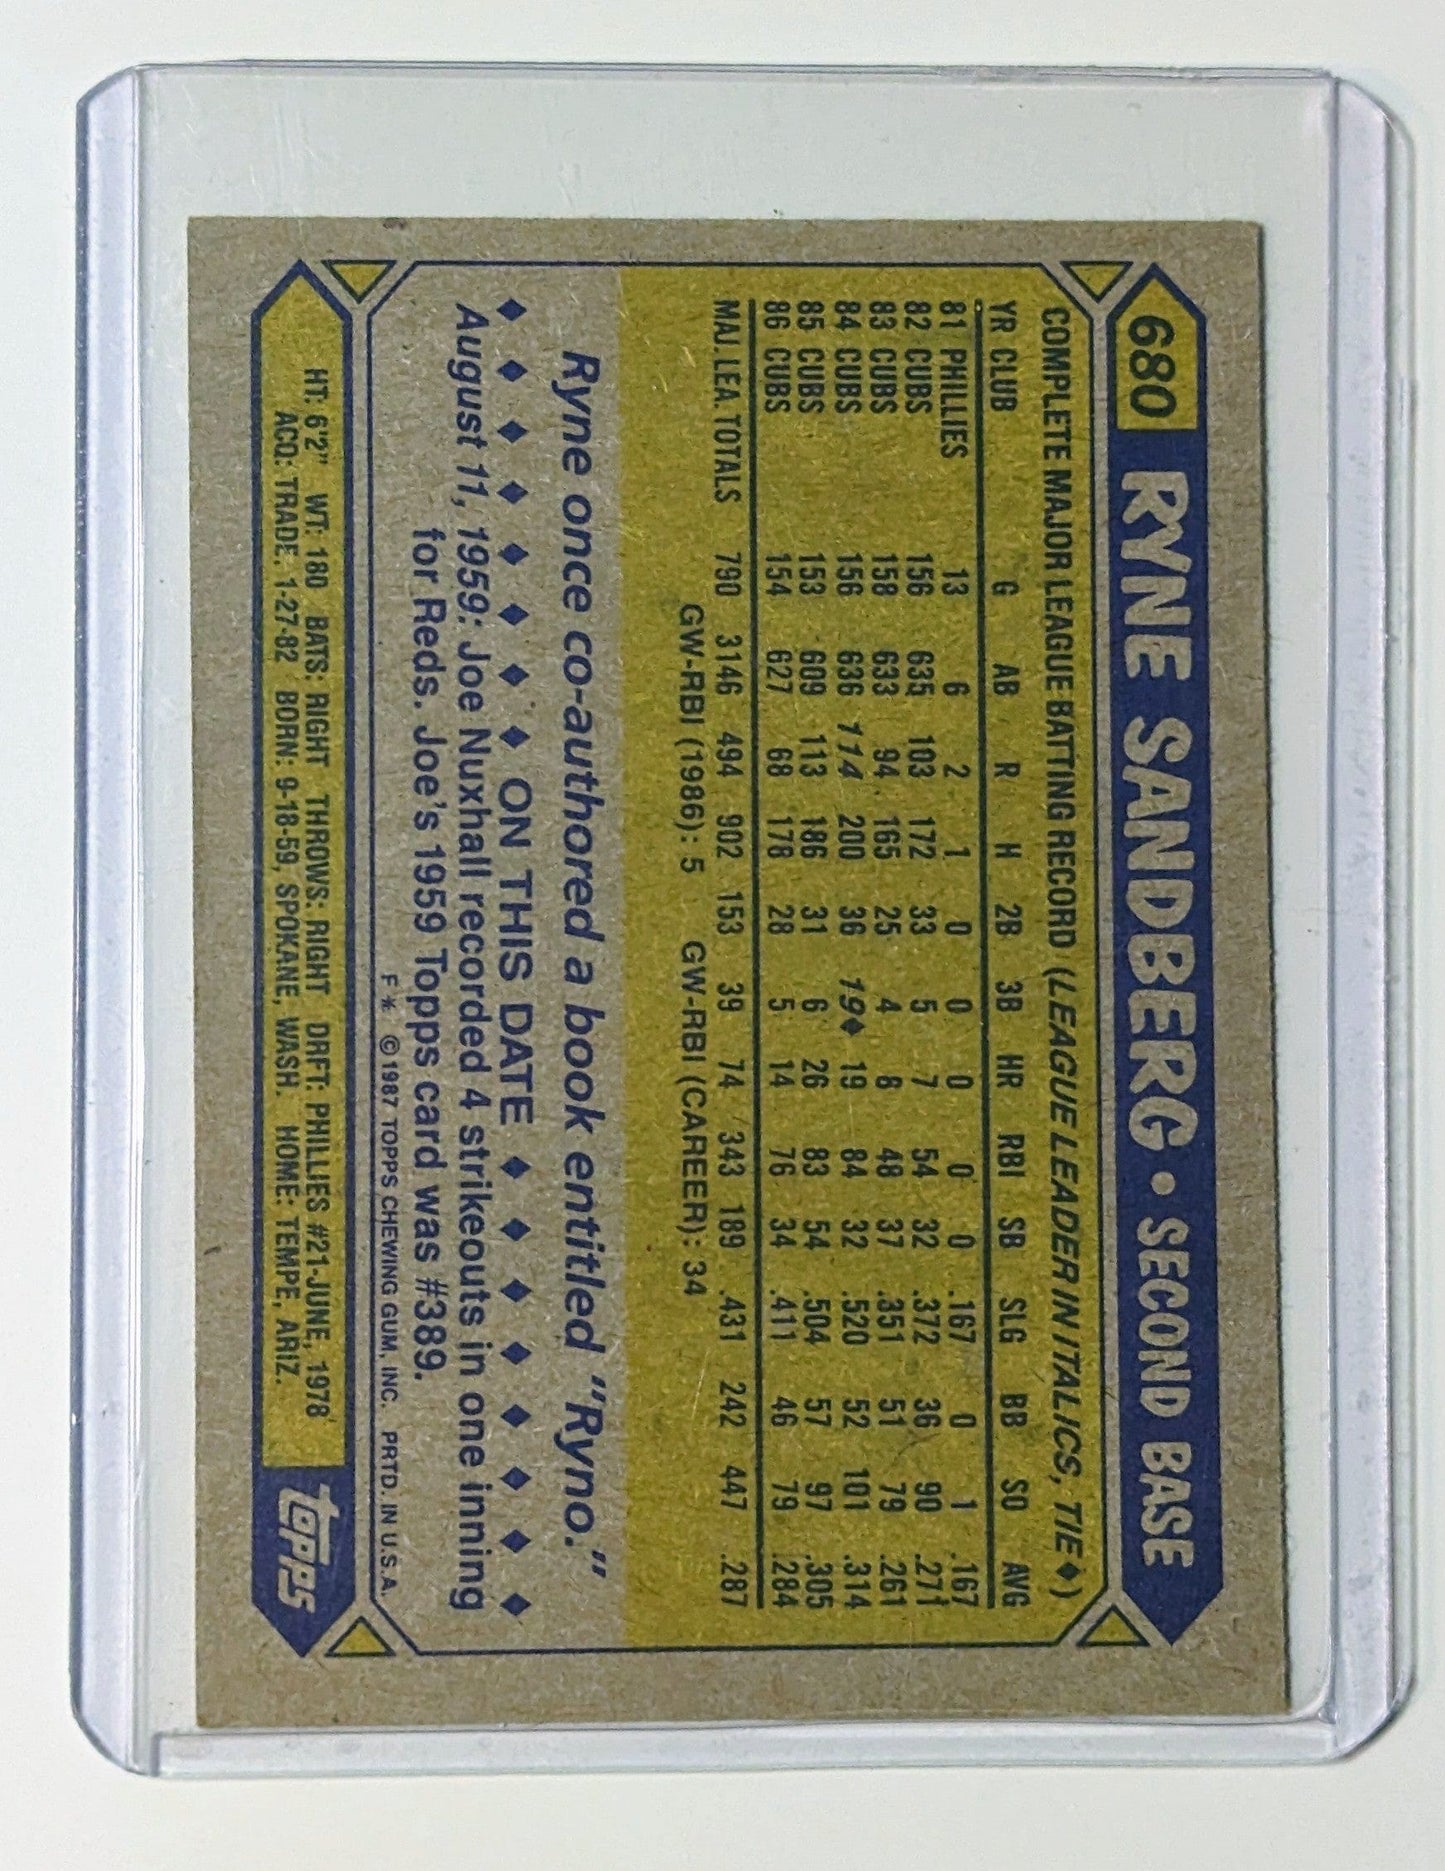 FIINR Baseball Card 1987 Ryne Sandberg Baseball Card #680 - Mint Condition